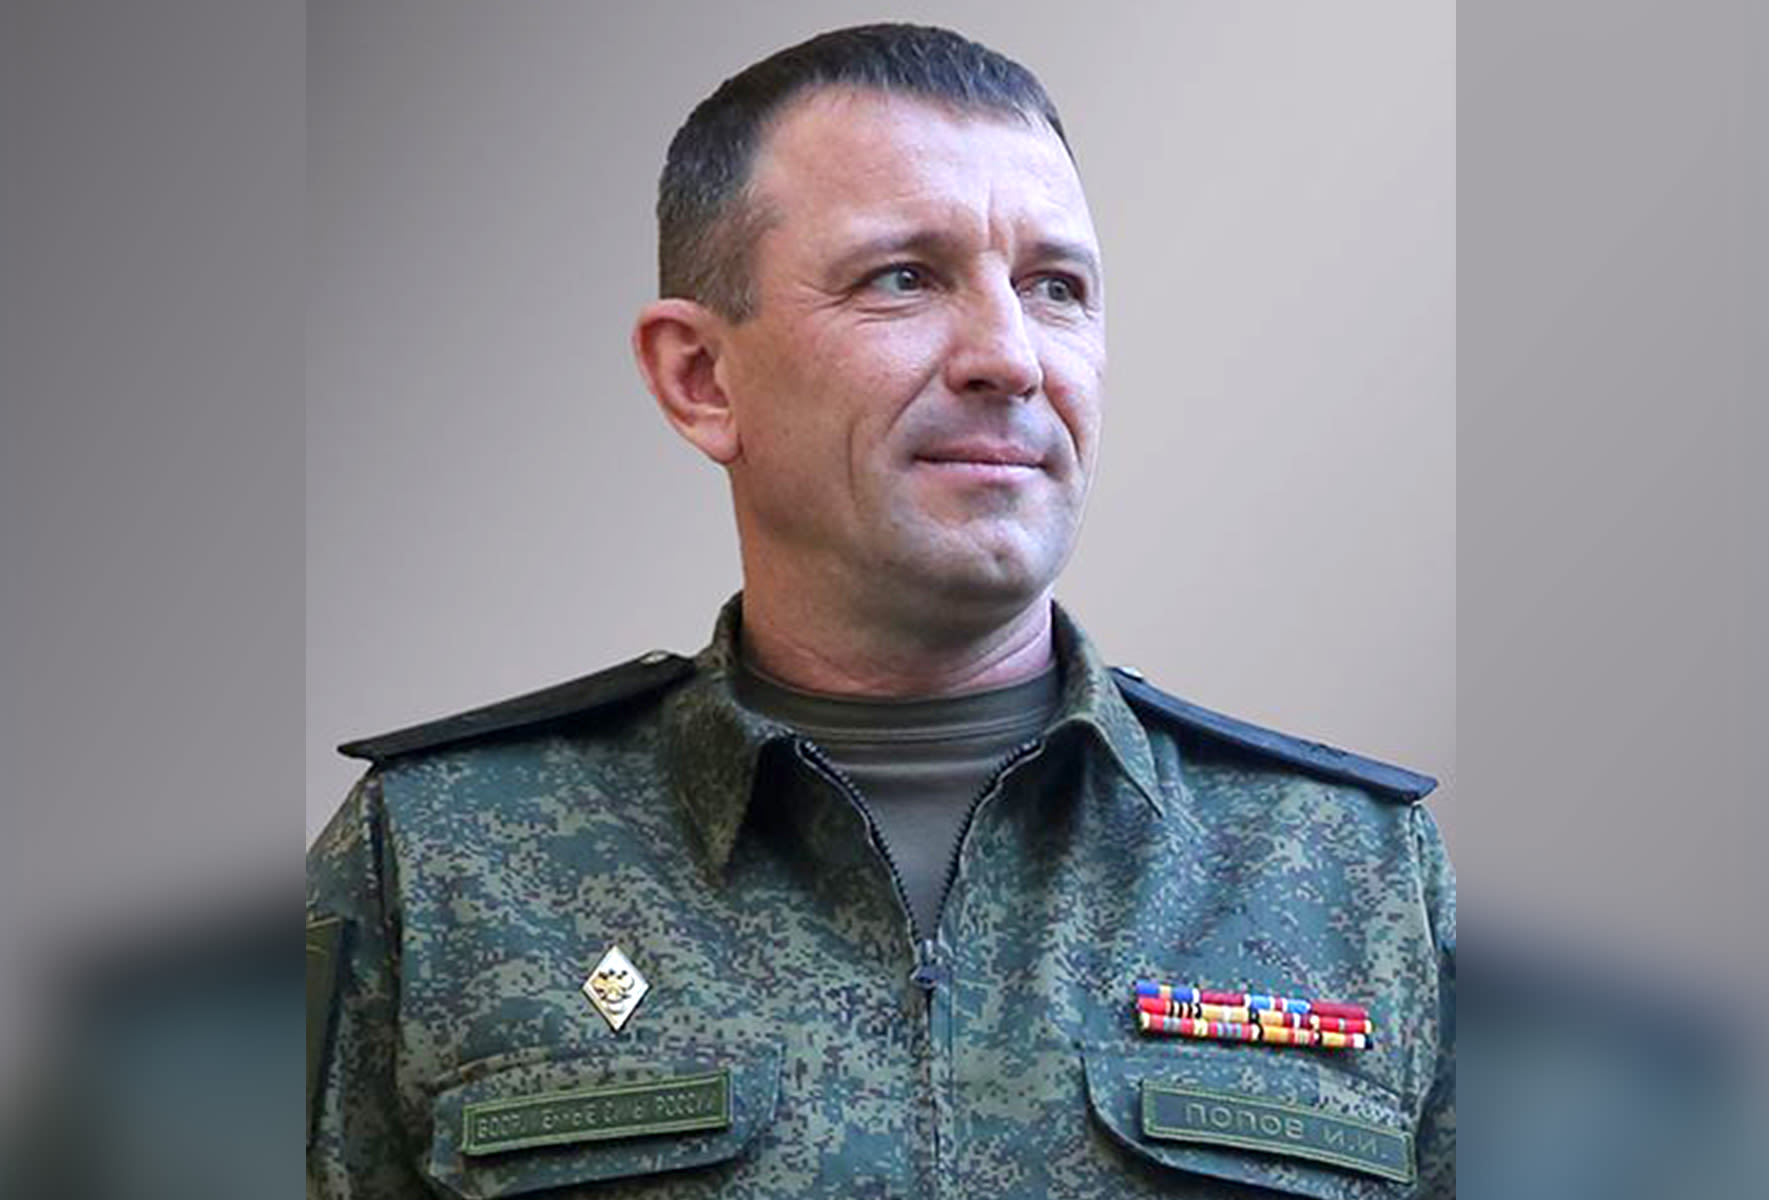 Russia arrests top commander who slammed Putin's military